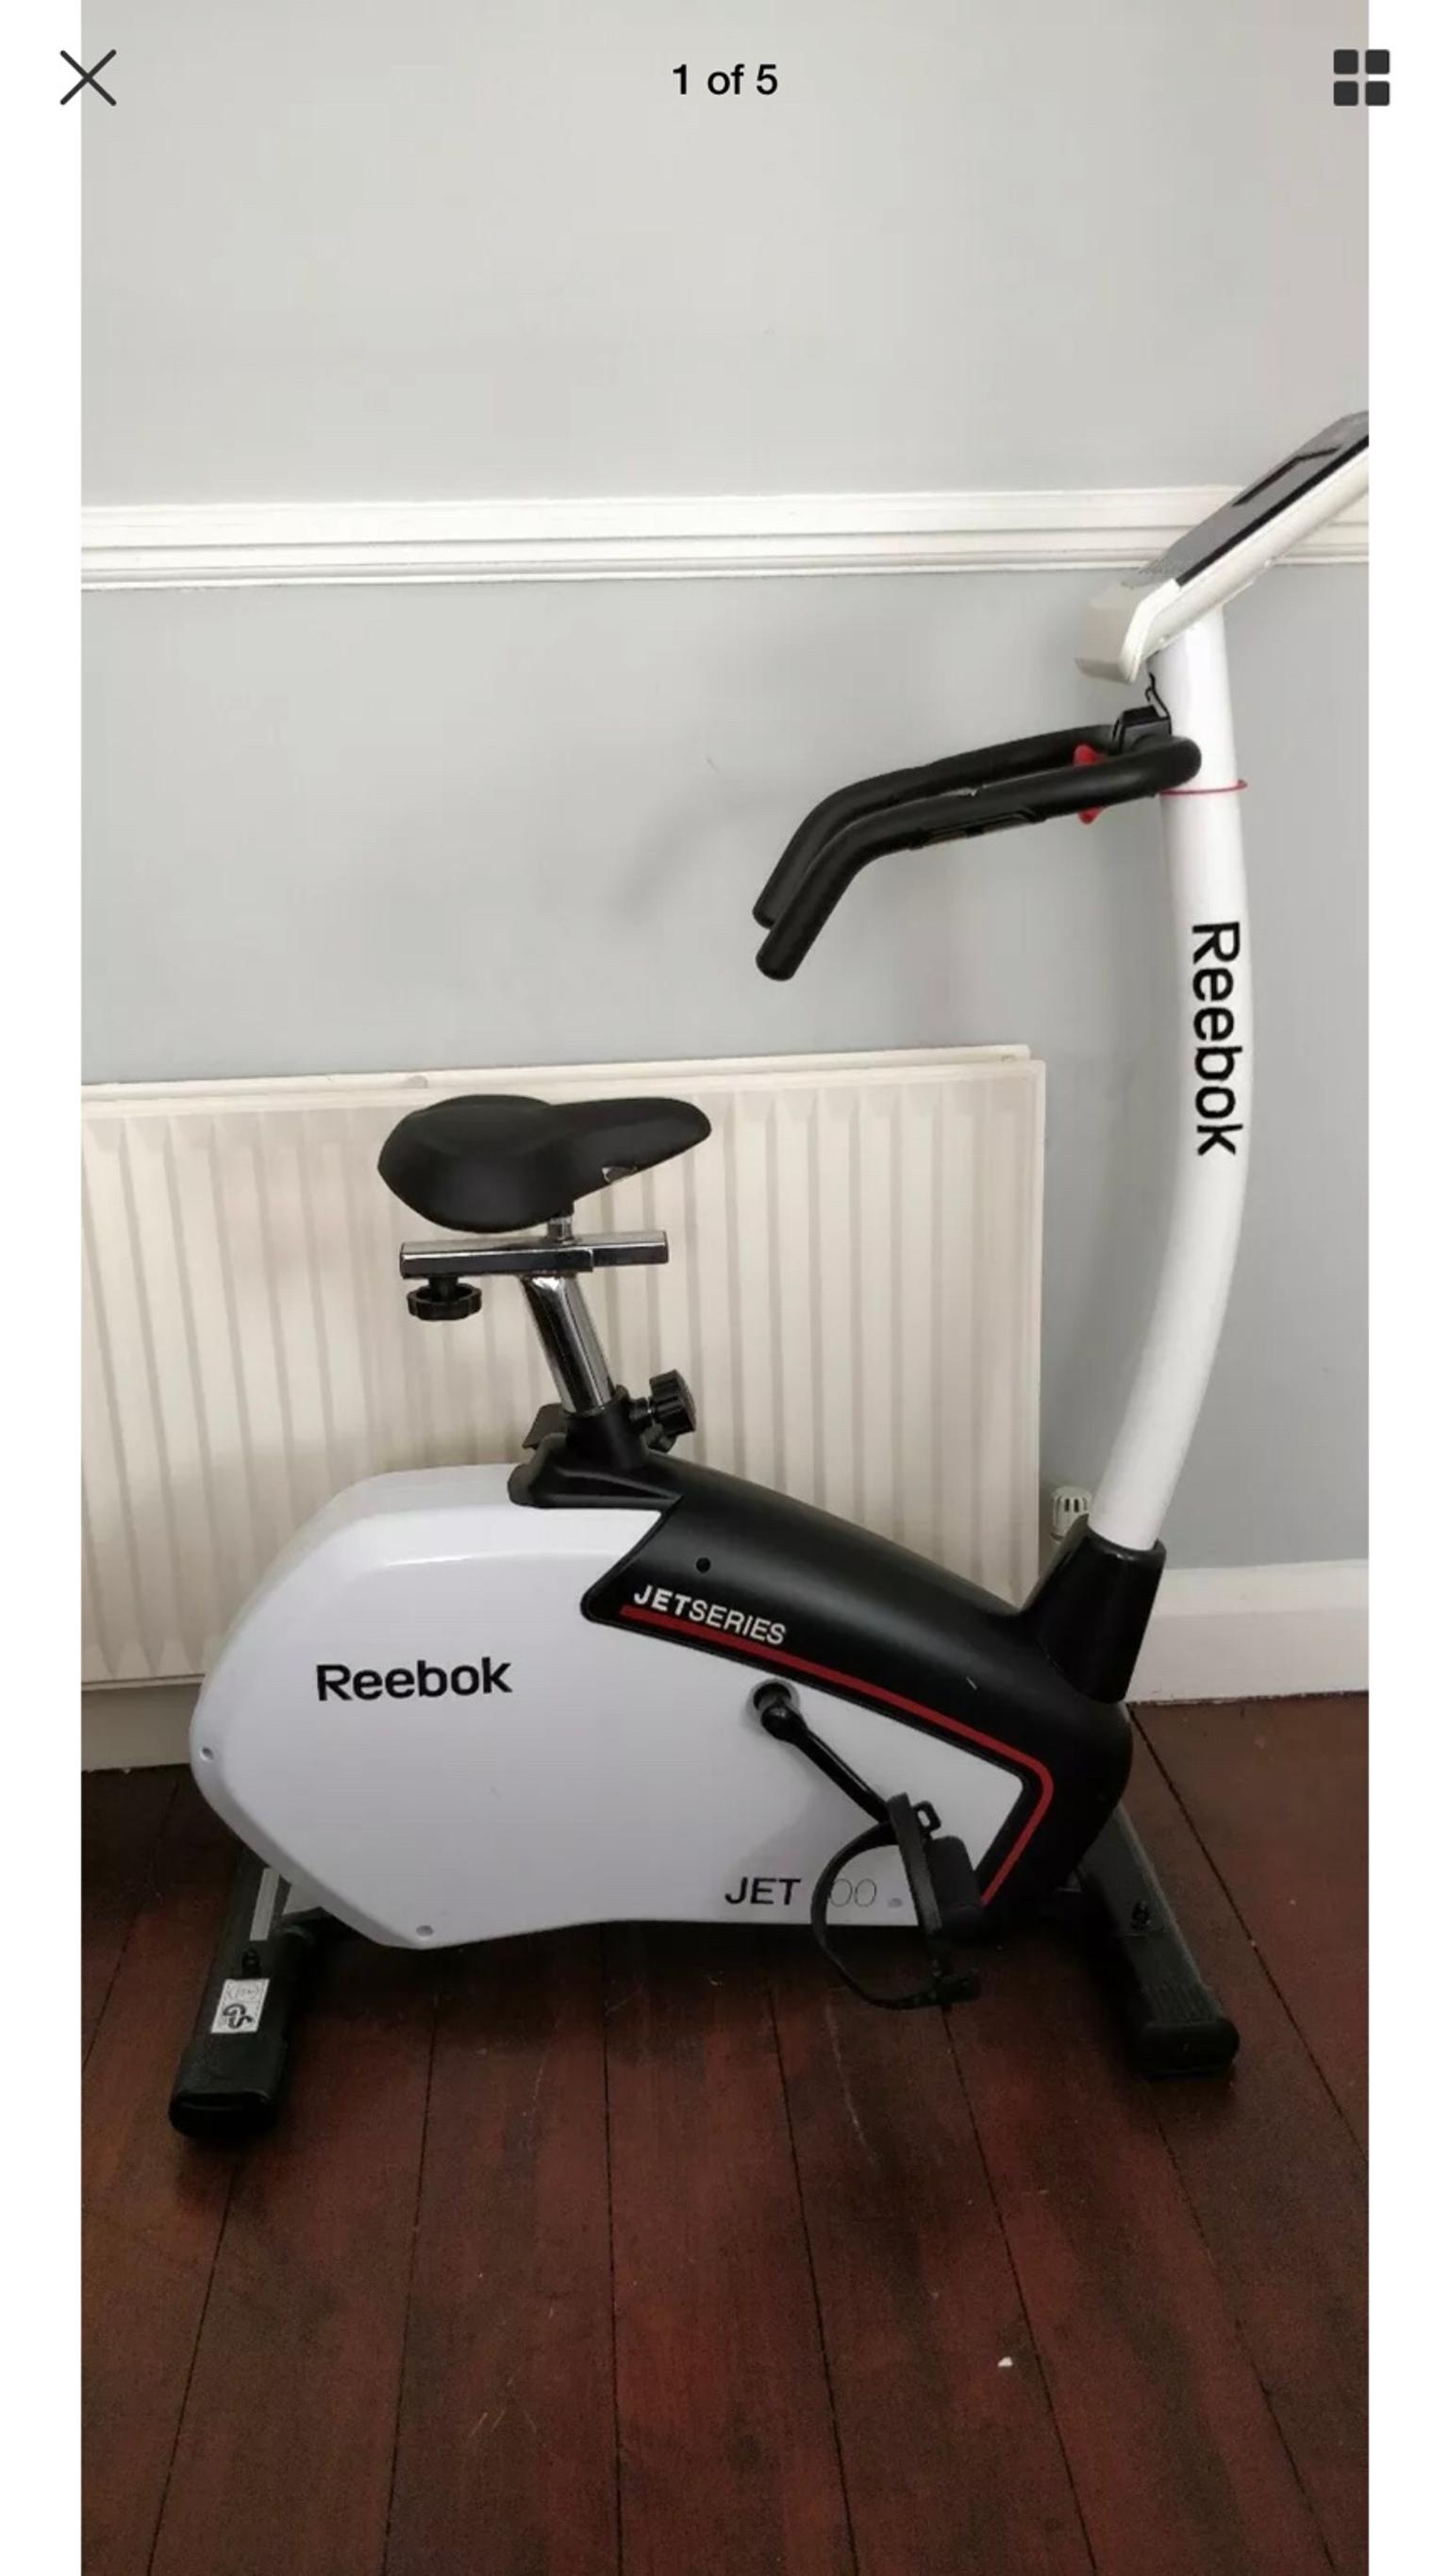 reebok jet 100 exercise bike price